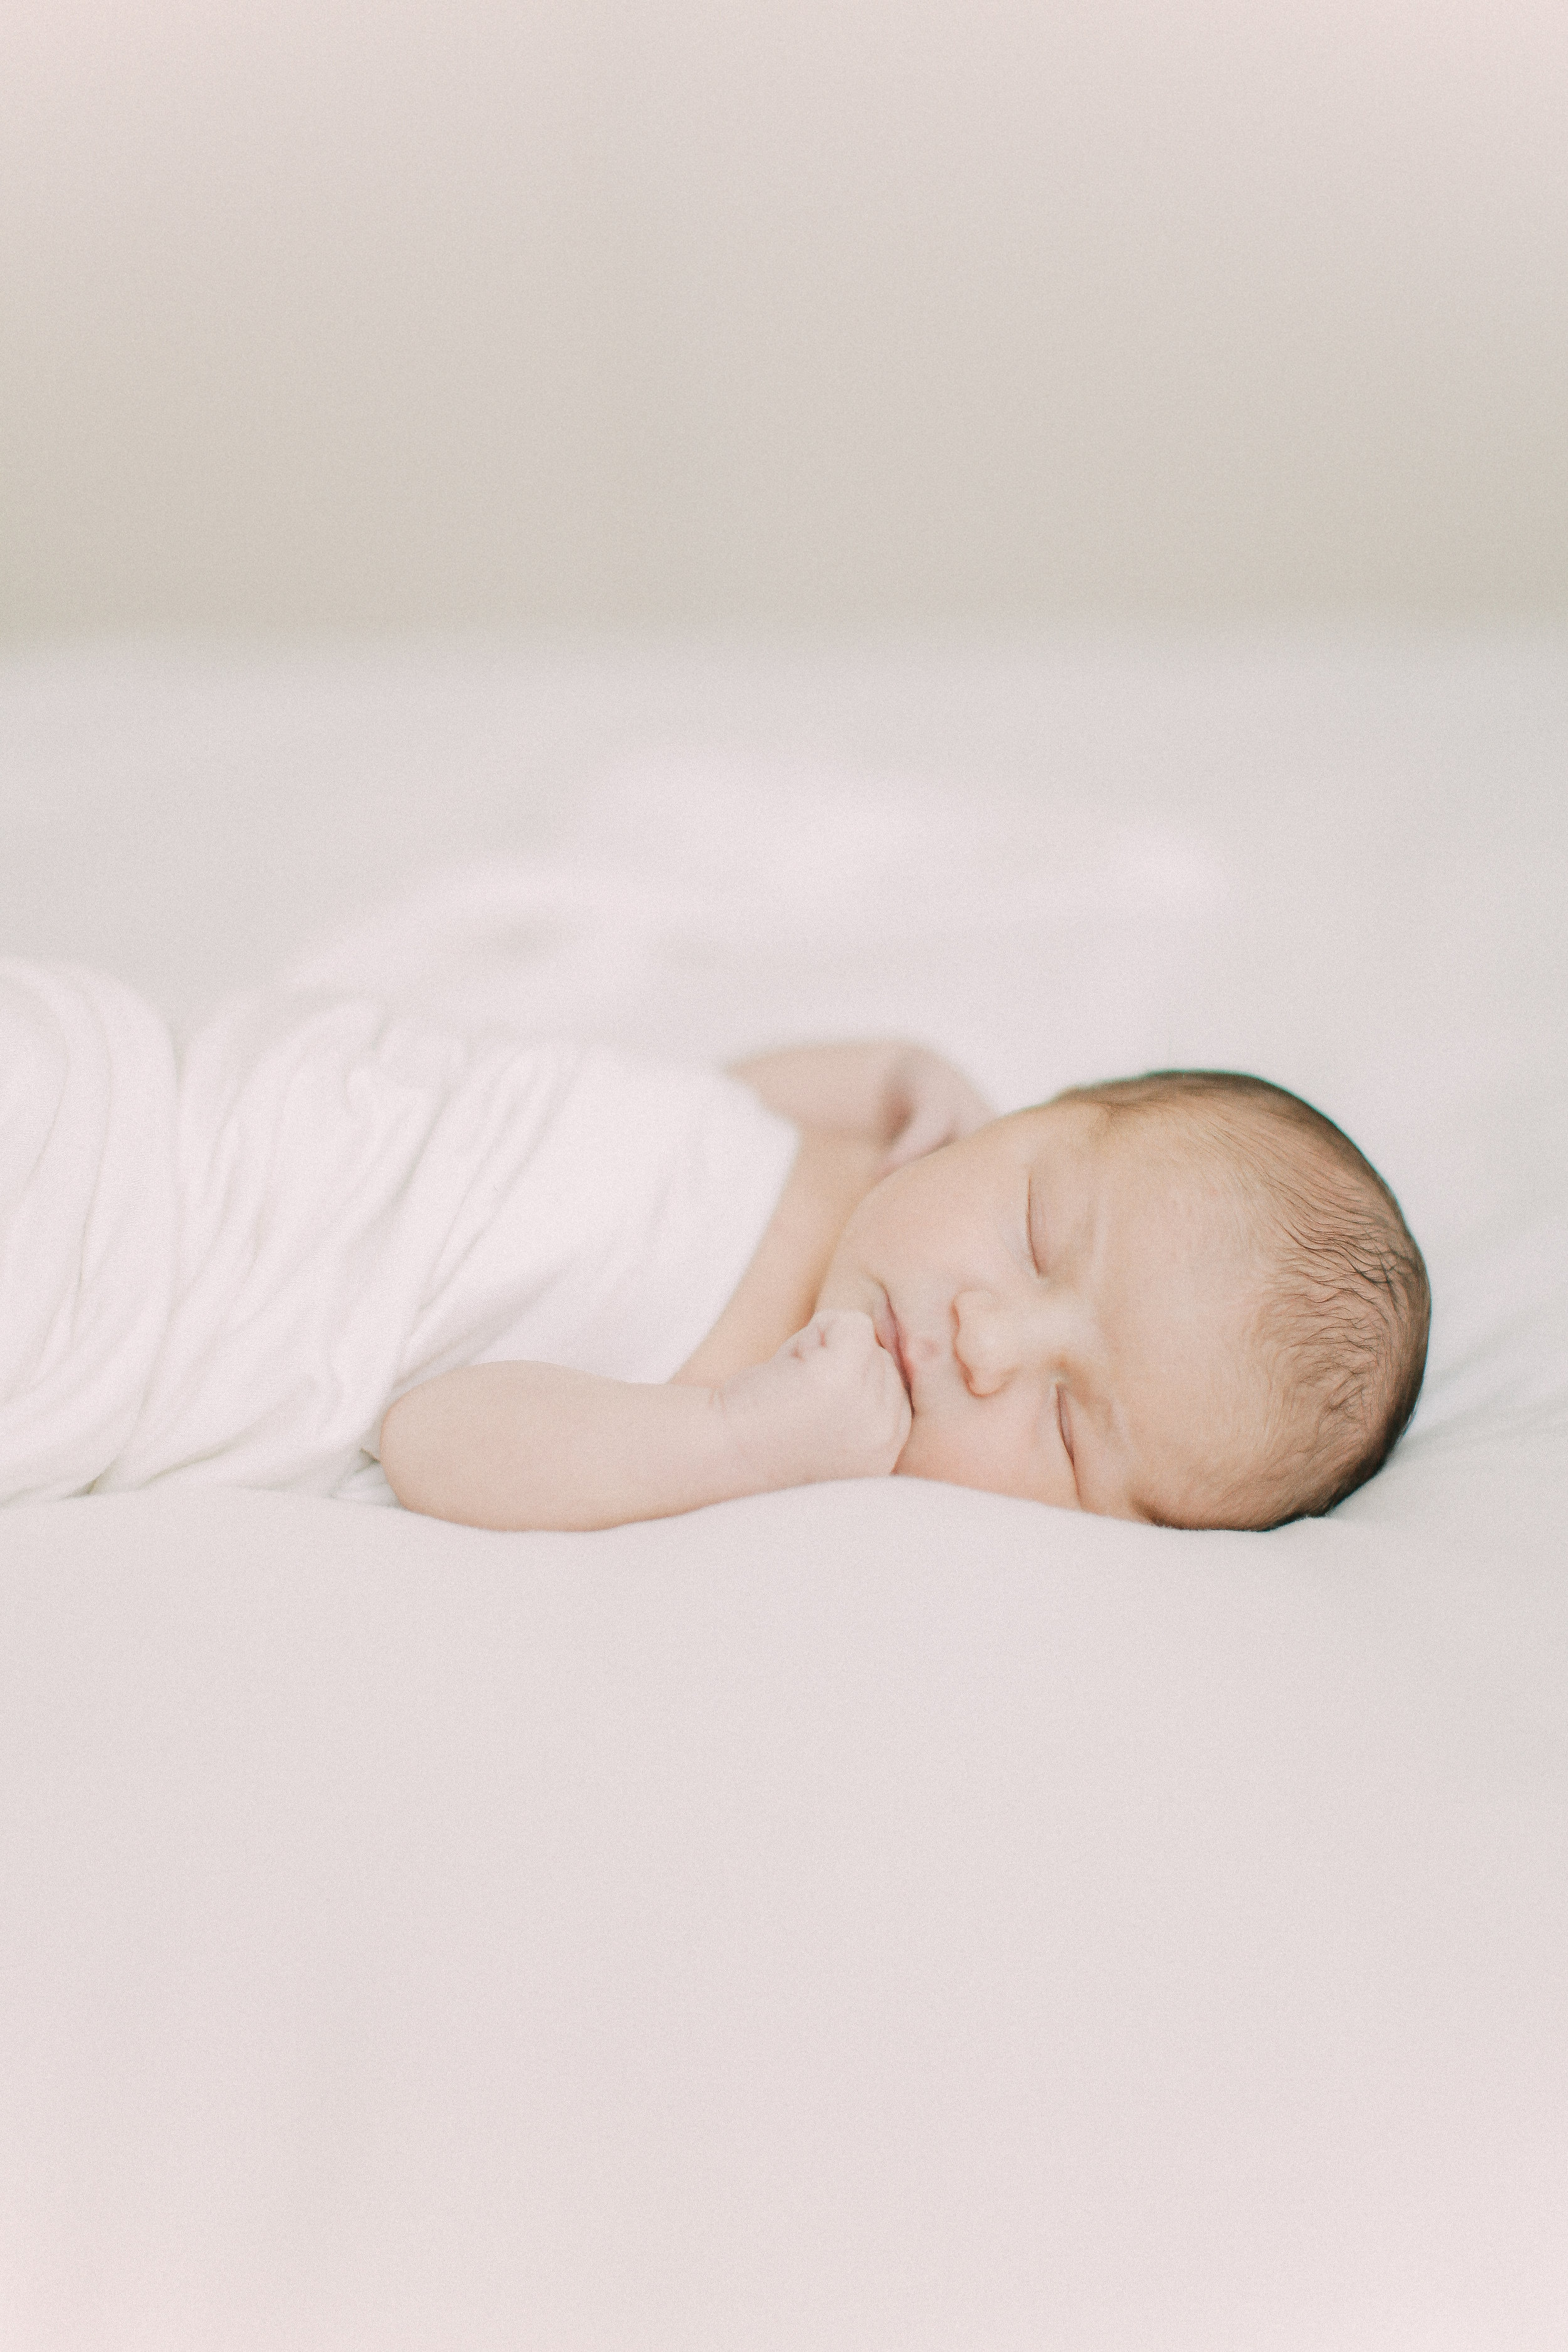 Cori Kleckner Photography- Baby Riley1-169.JPG